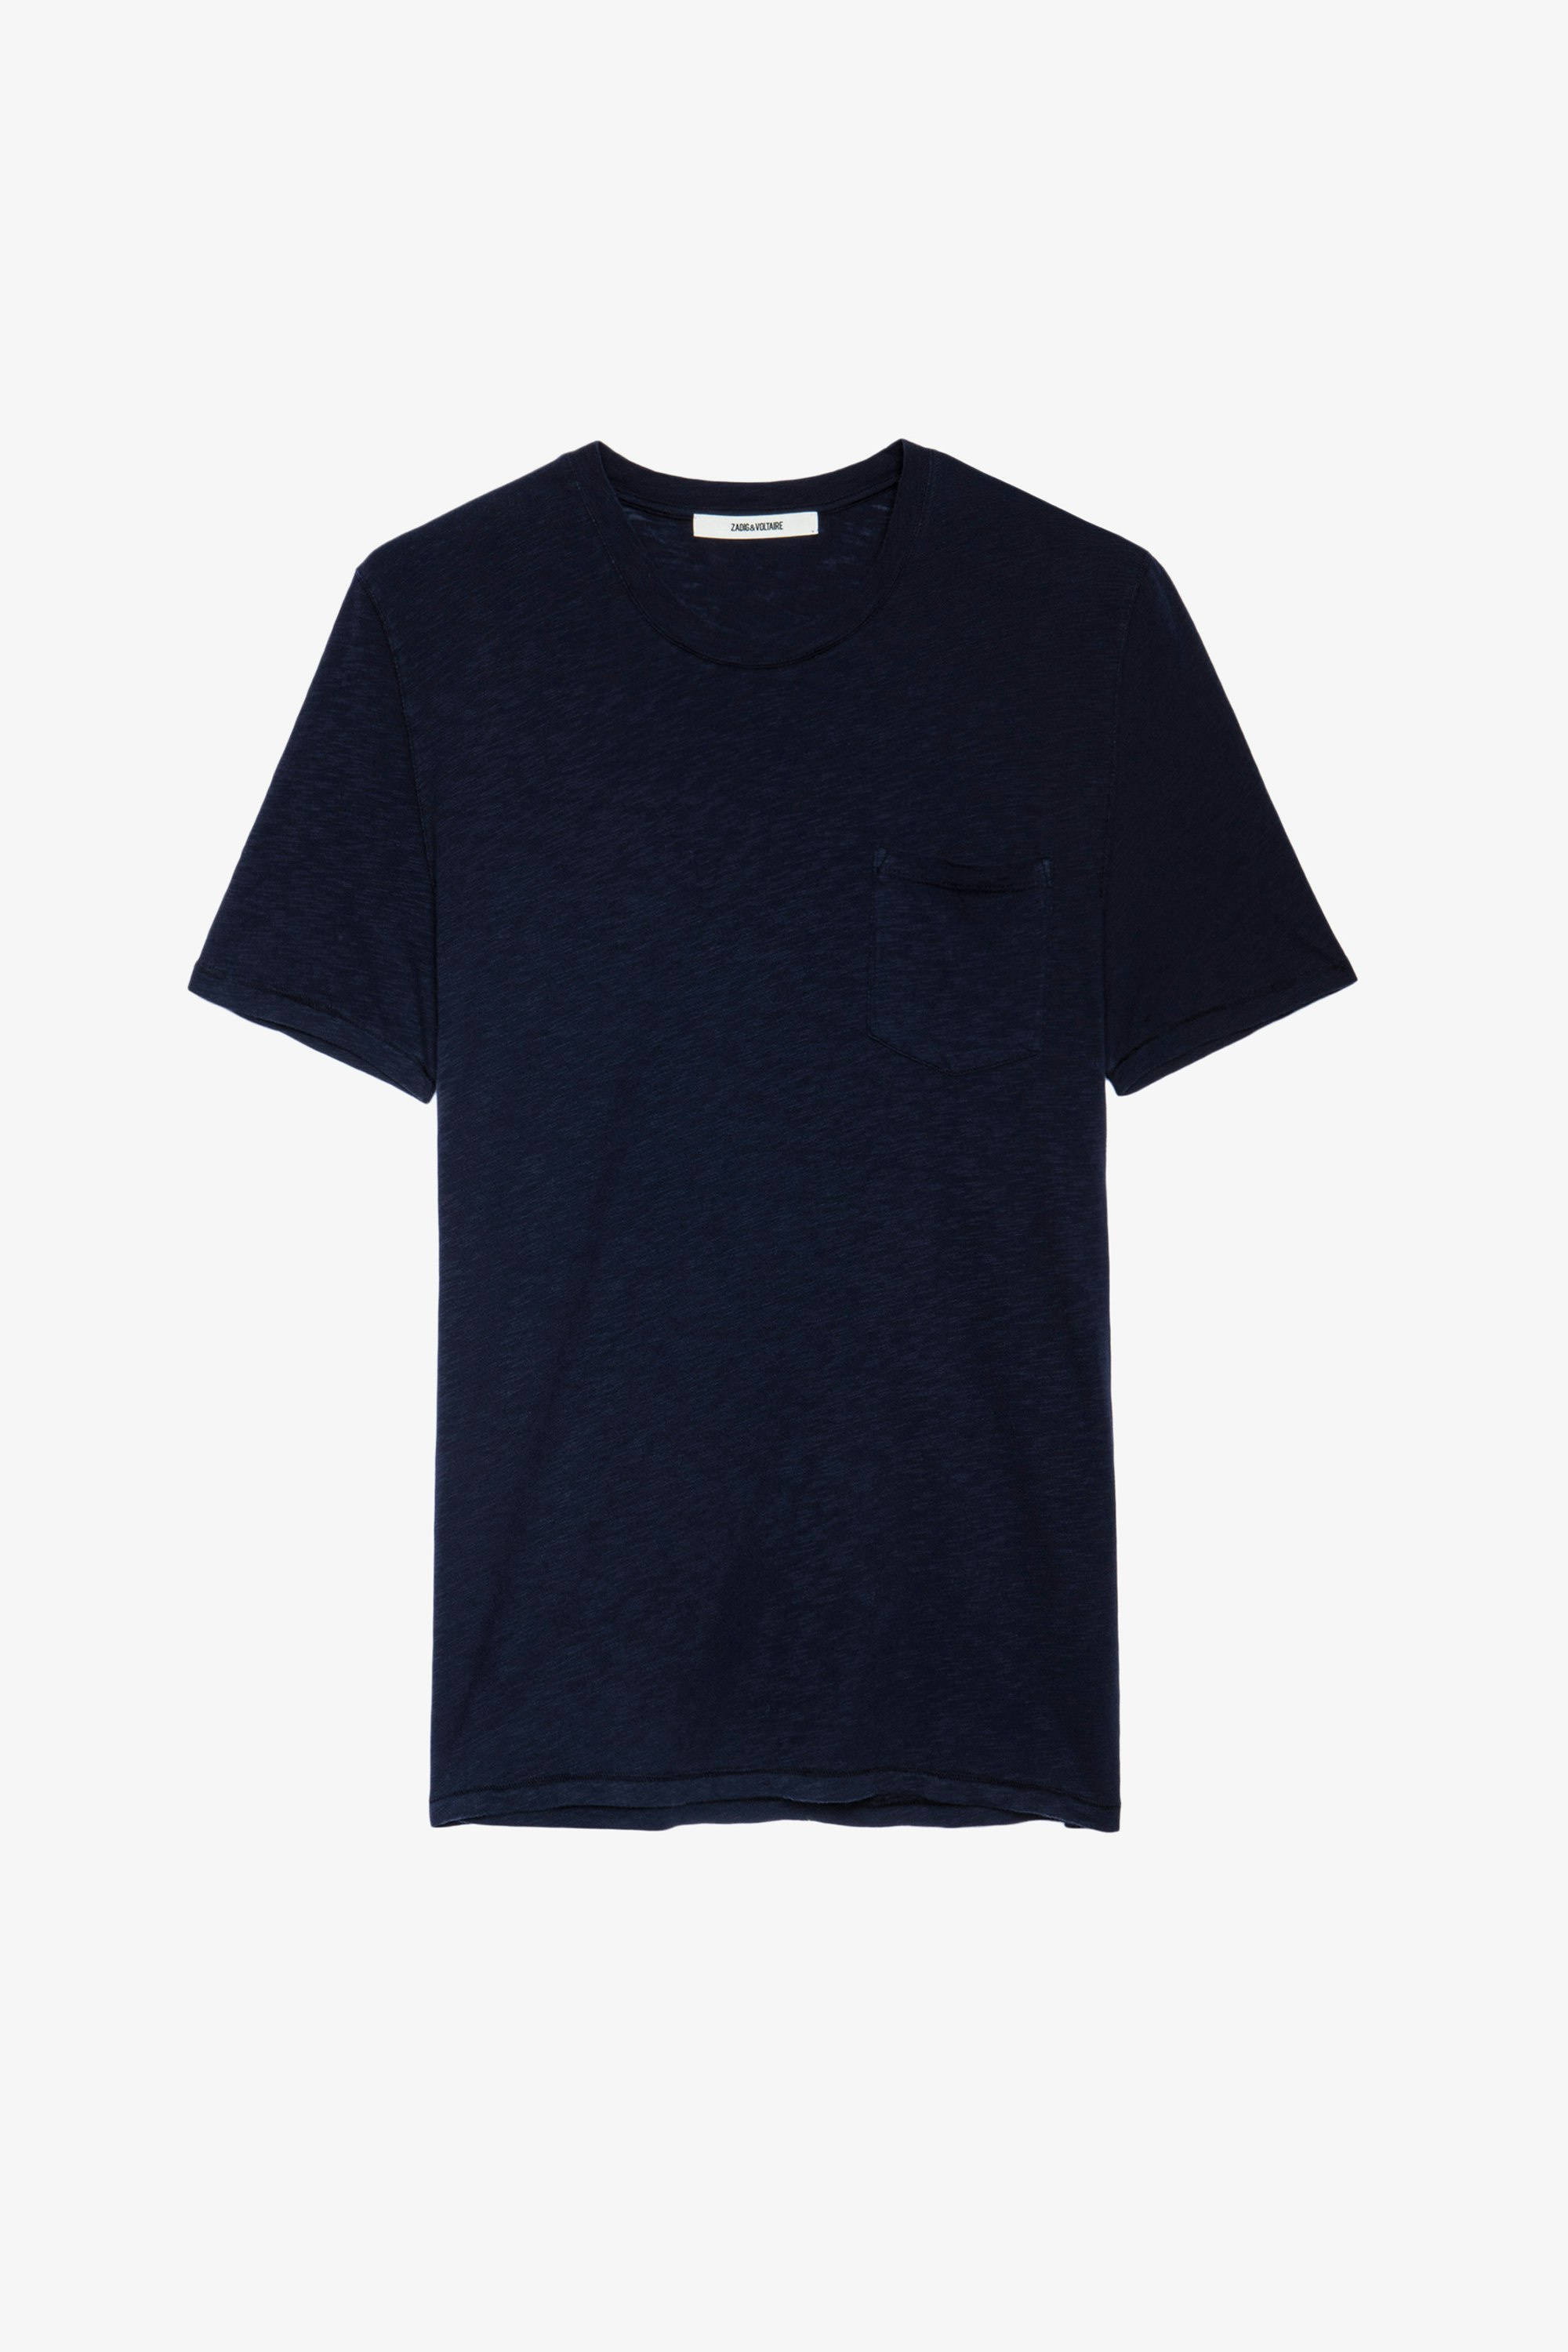 Stockholm T-Shirt Men's blue T-shirt.